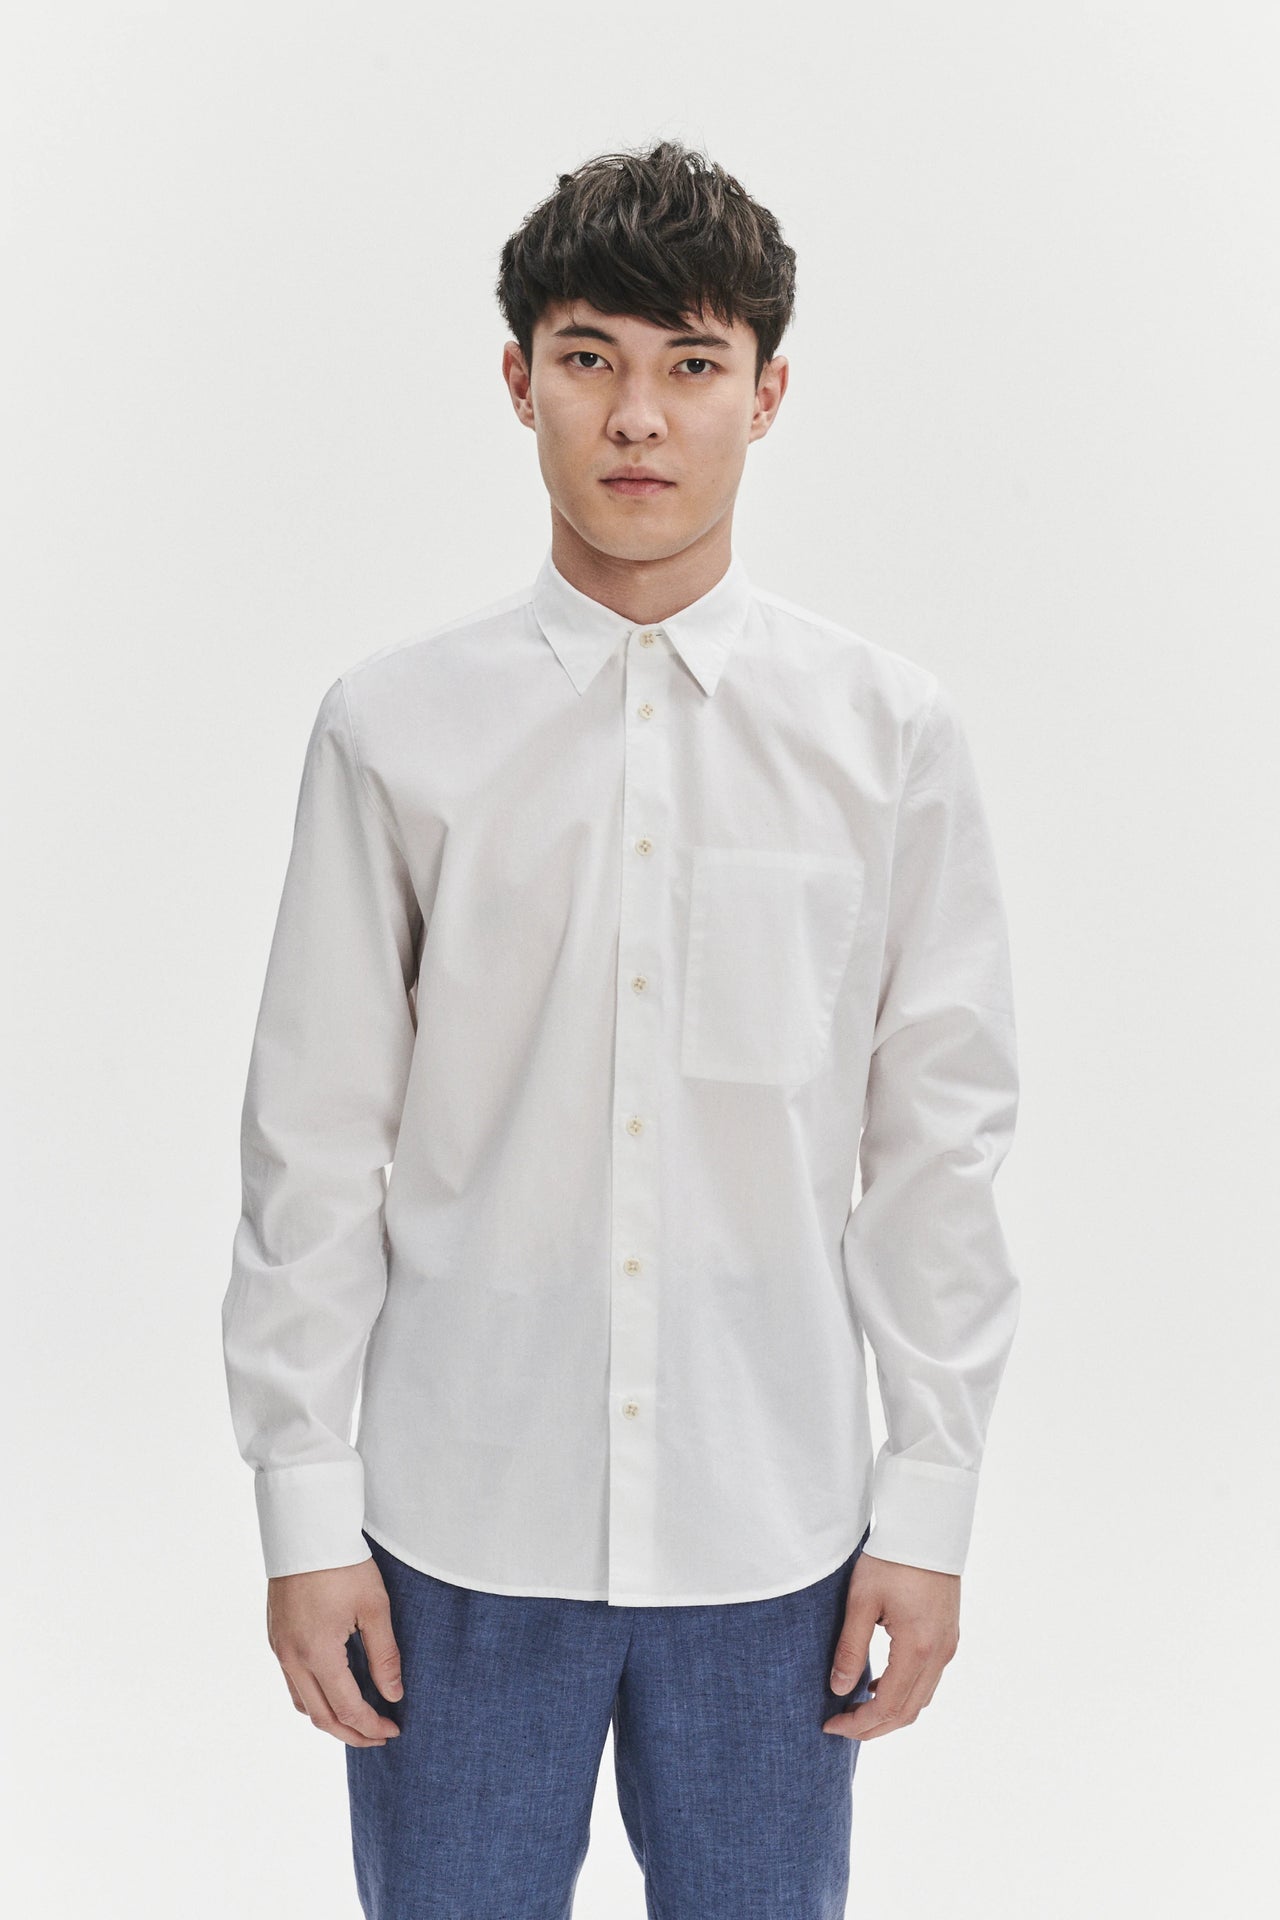 Feel Good Shirt in a White Fine Organic Portuguese Cotton Poplin